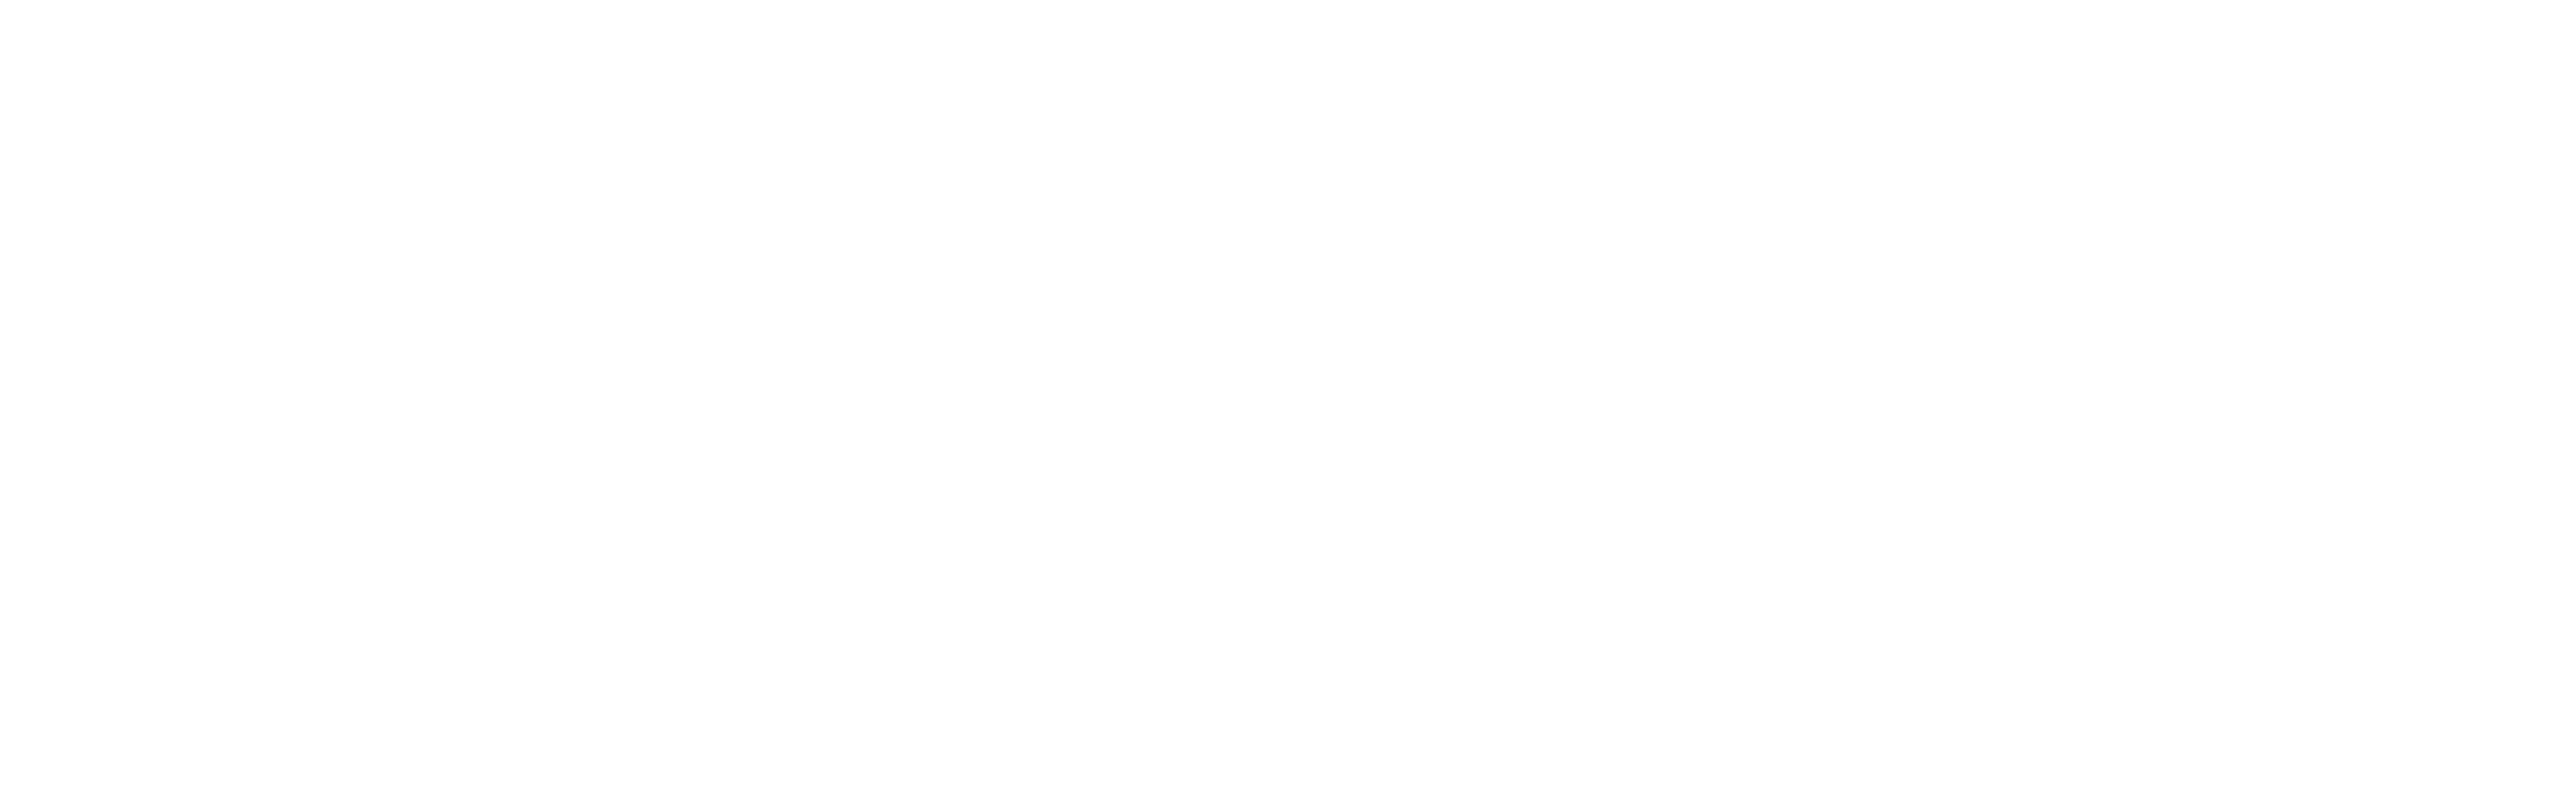 True Friends Pet Care